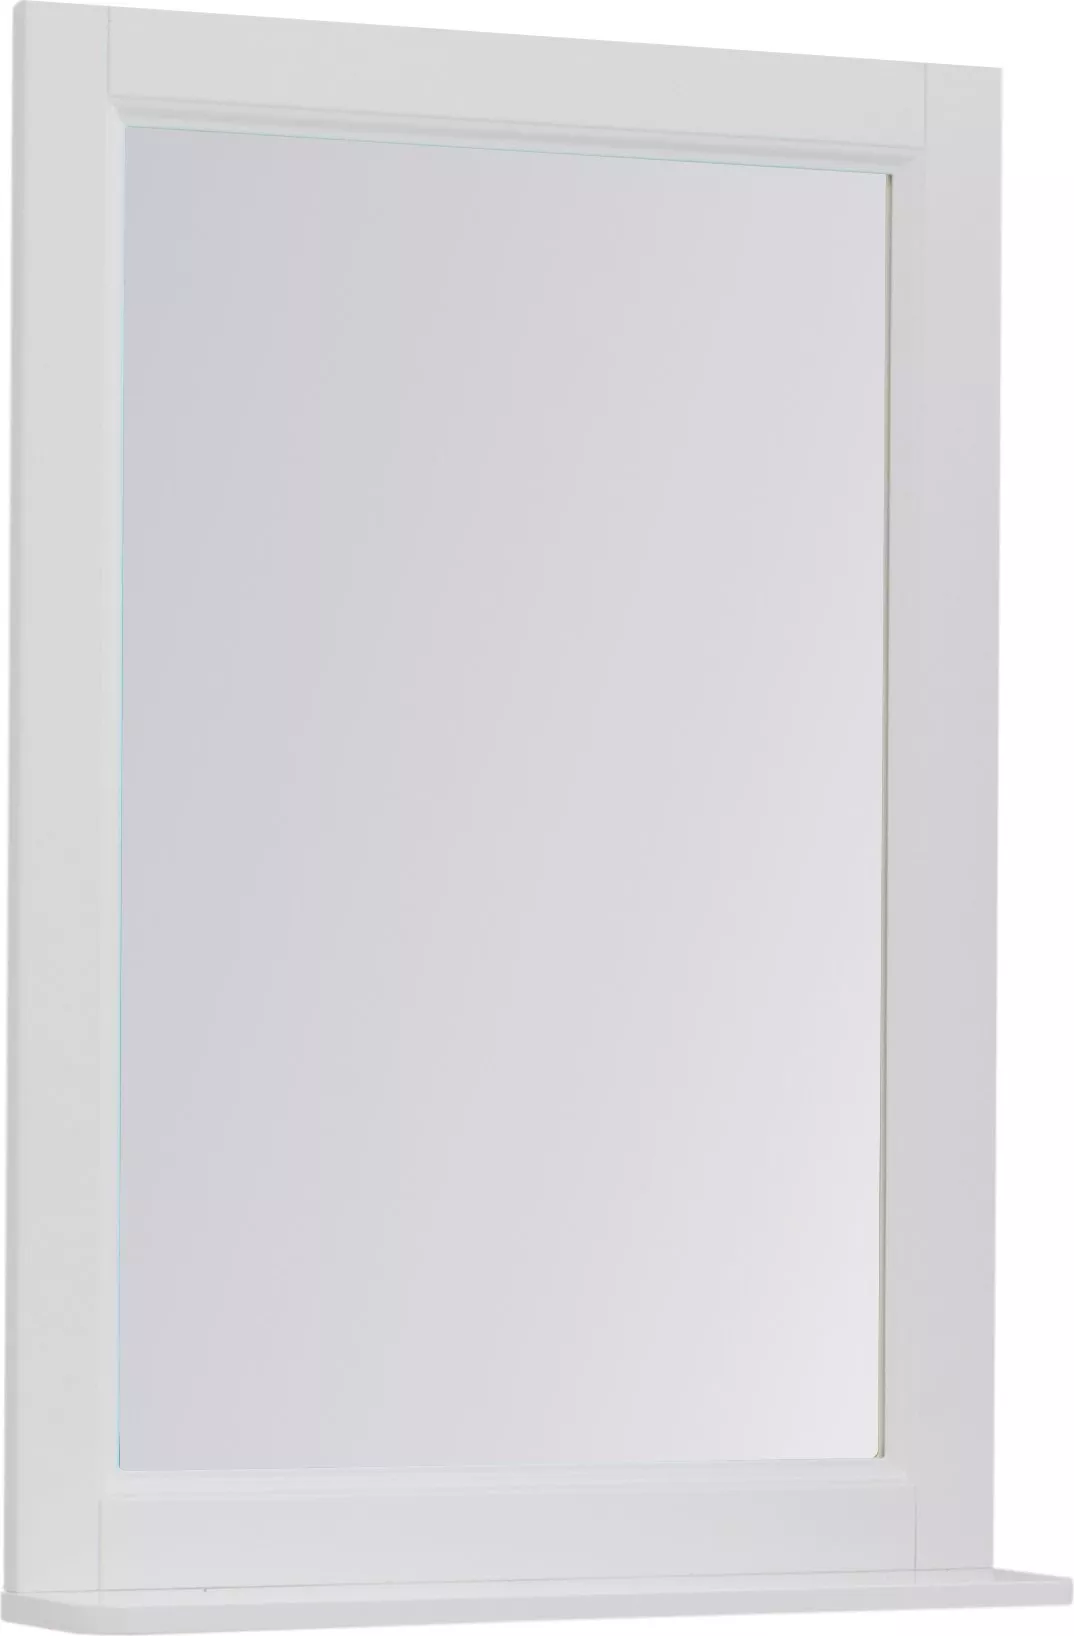 Зеркало Aquanet Бостон М 60, размер 61, цвет белый 209675 00209675 - фото 1